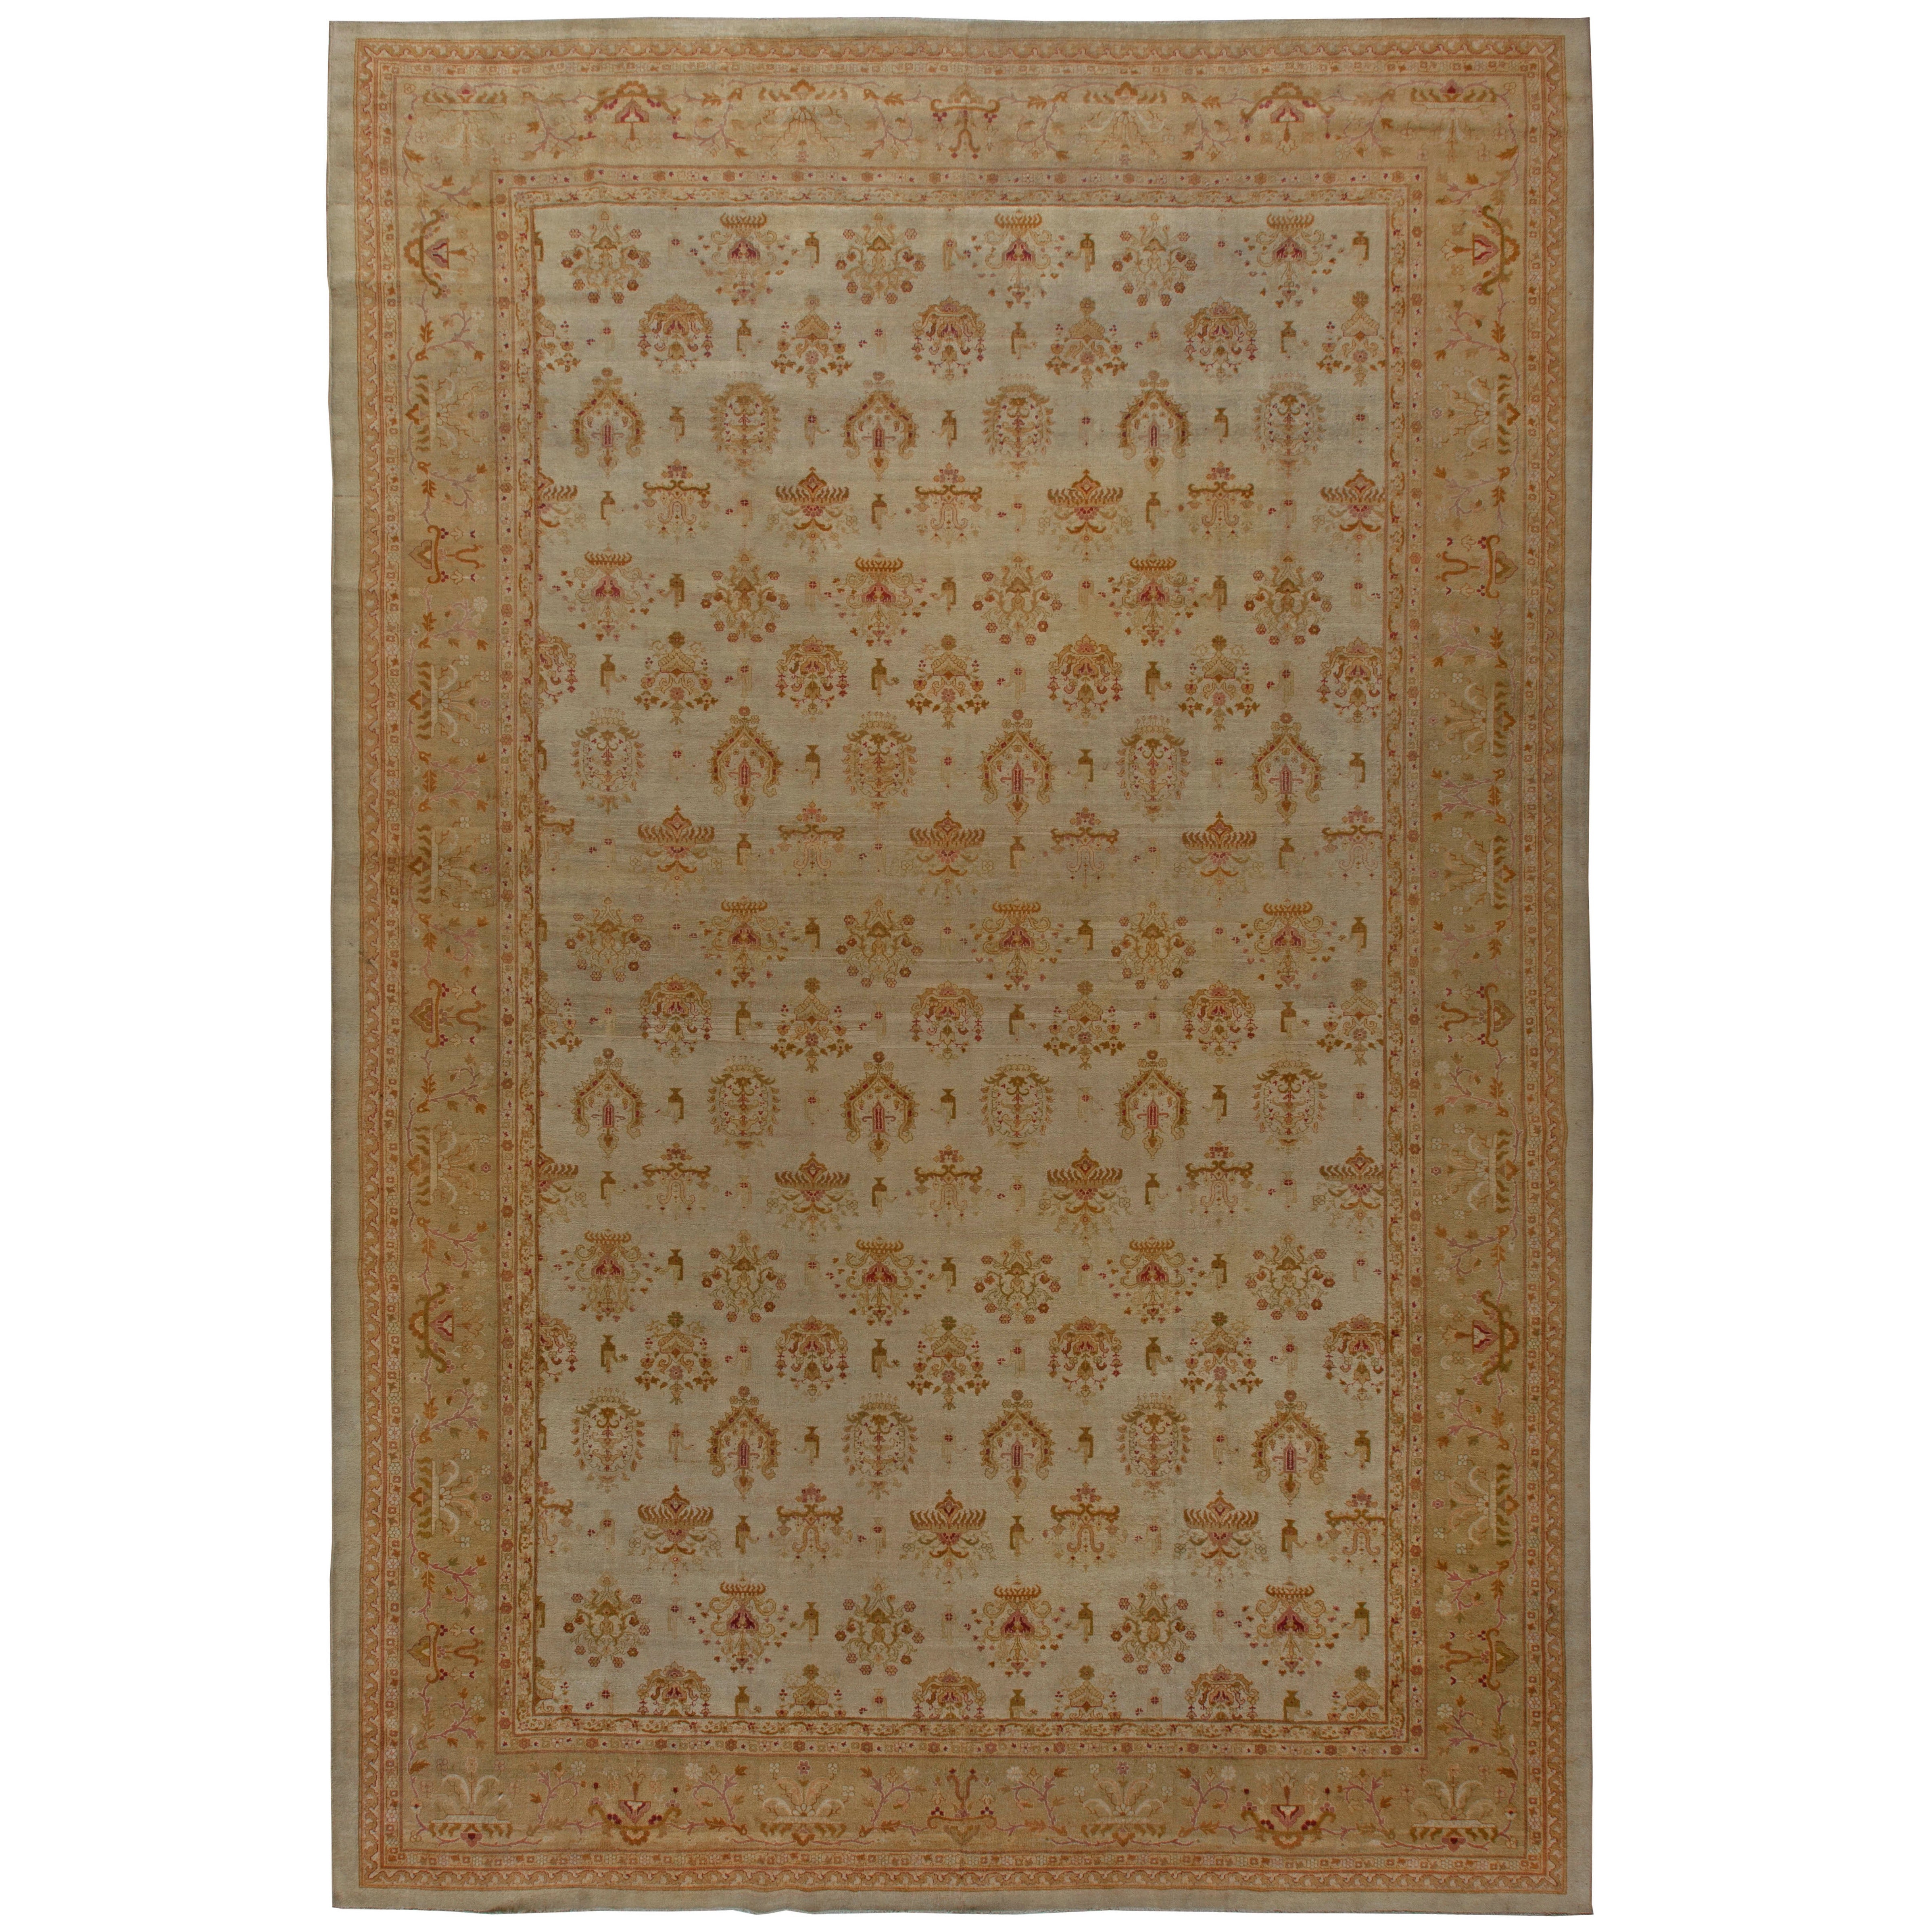 Authentic Indian Amritsar Handmade Wool Carpet